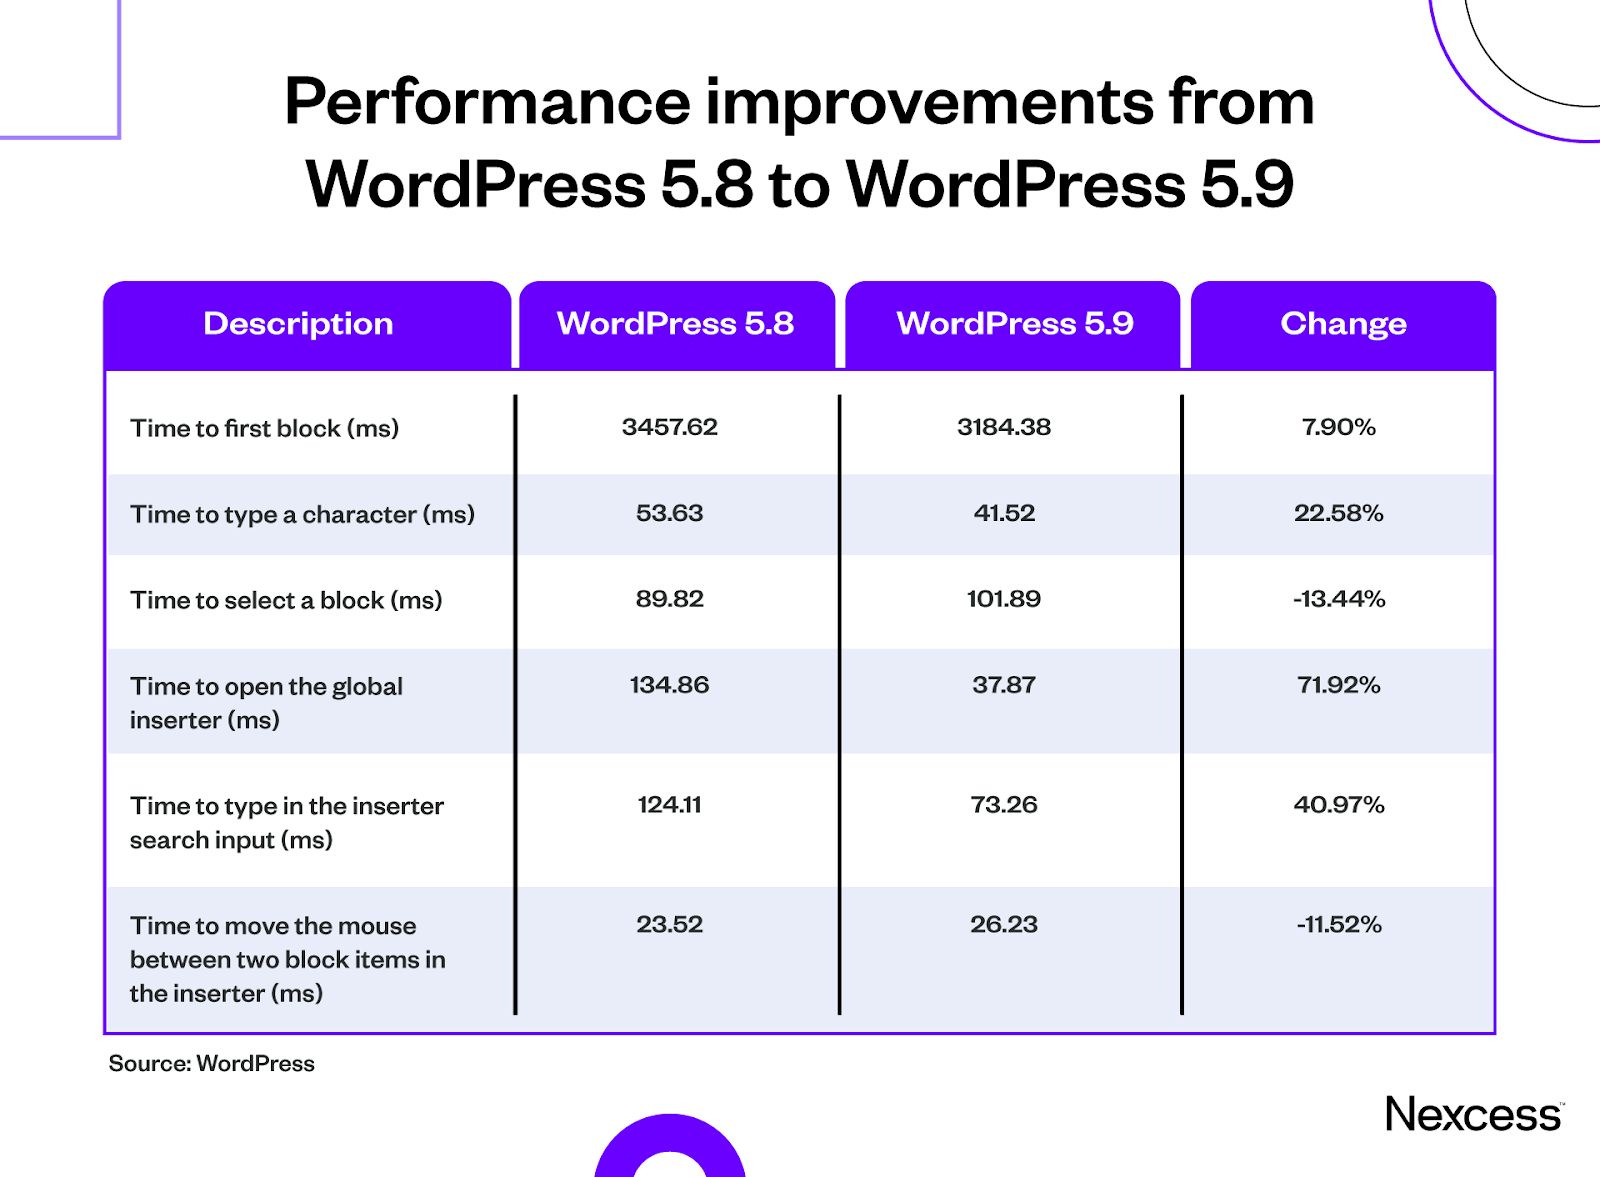 Performance improvements from WordPress 5.8 to WordPress 5.9.